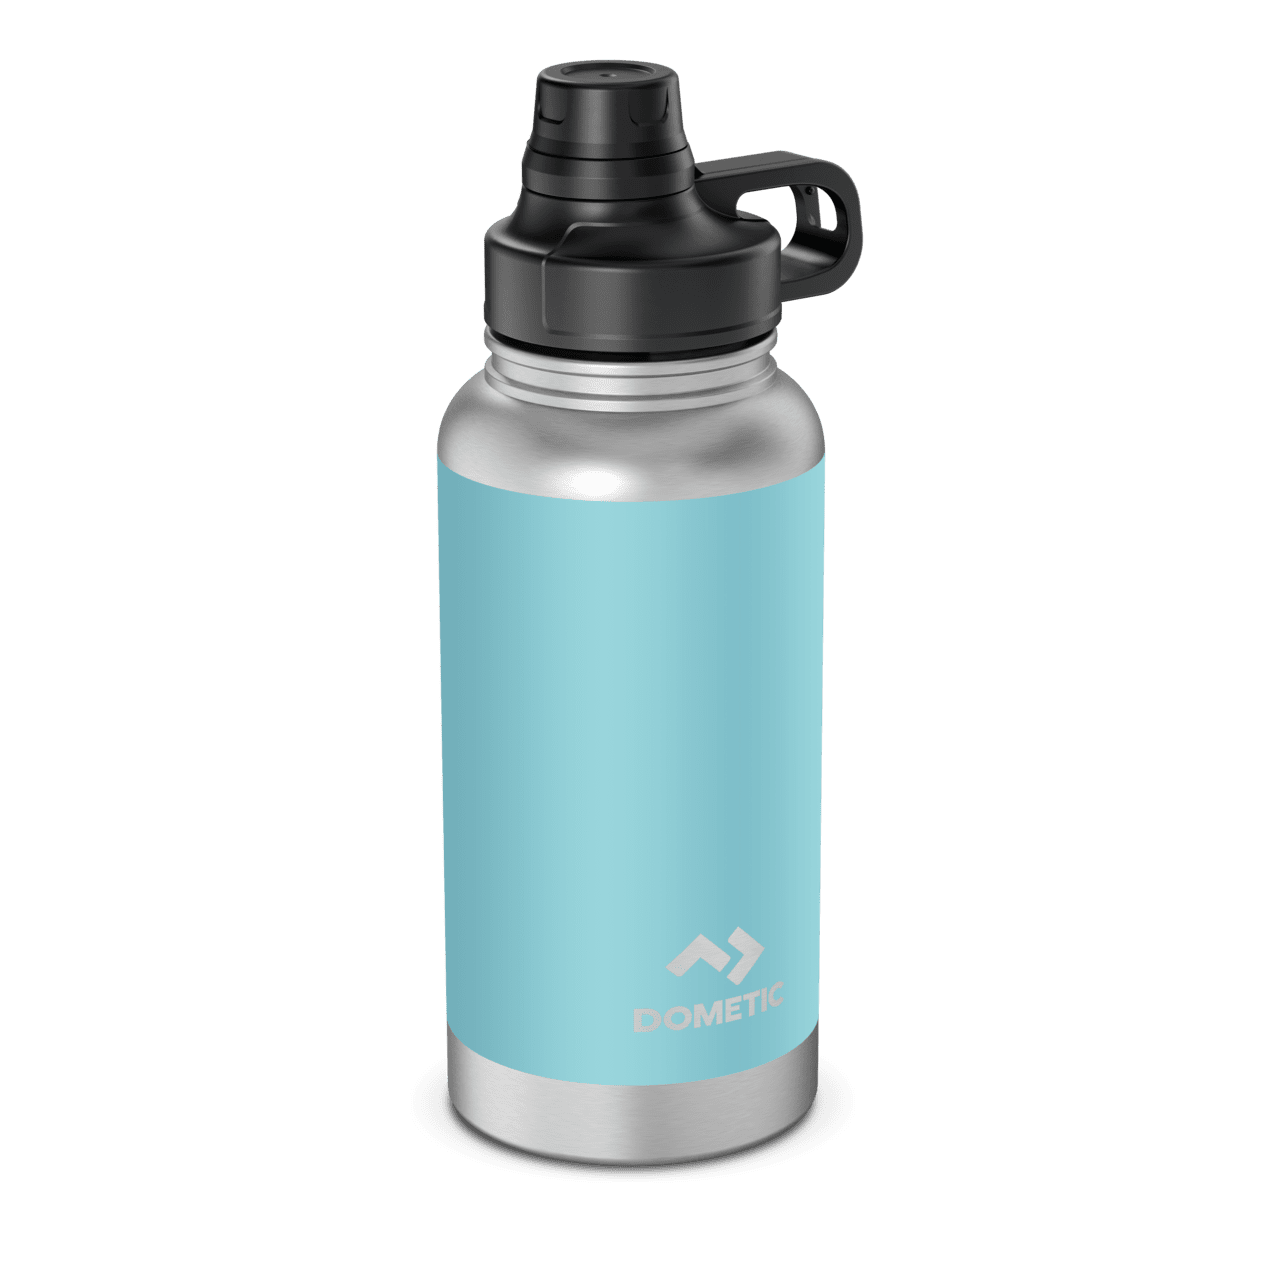 Dometic - Dometic Thermo Bottle 90 - Lagune